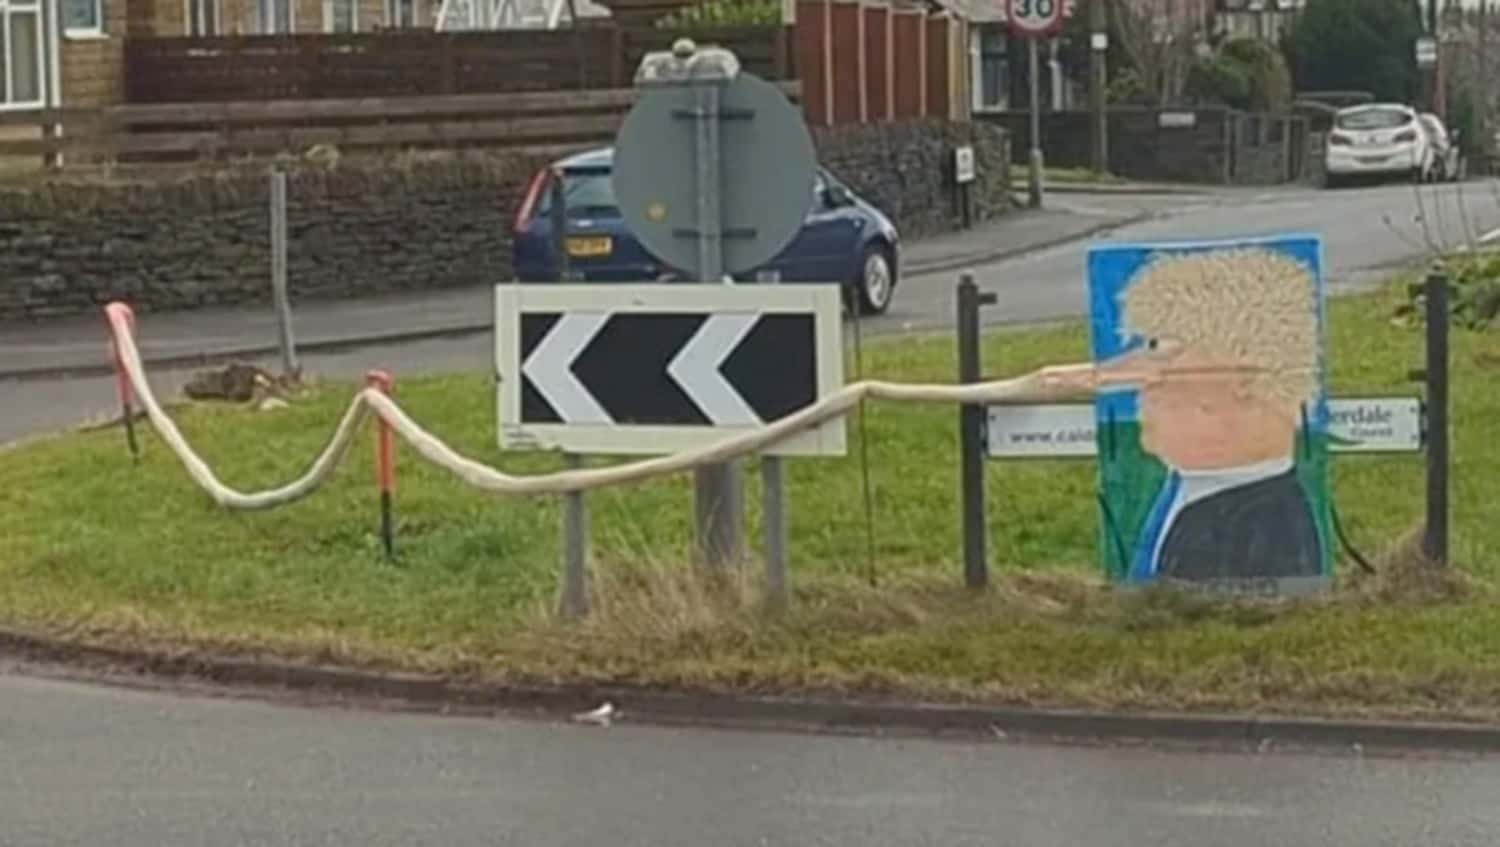 Roundabout installation in Halifax poking fun at Boris Johnson goes viral